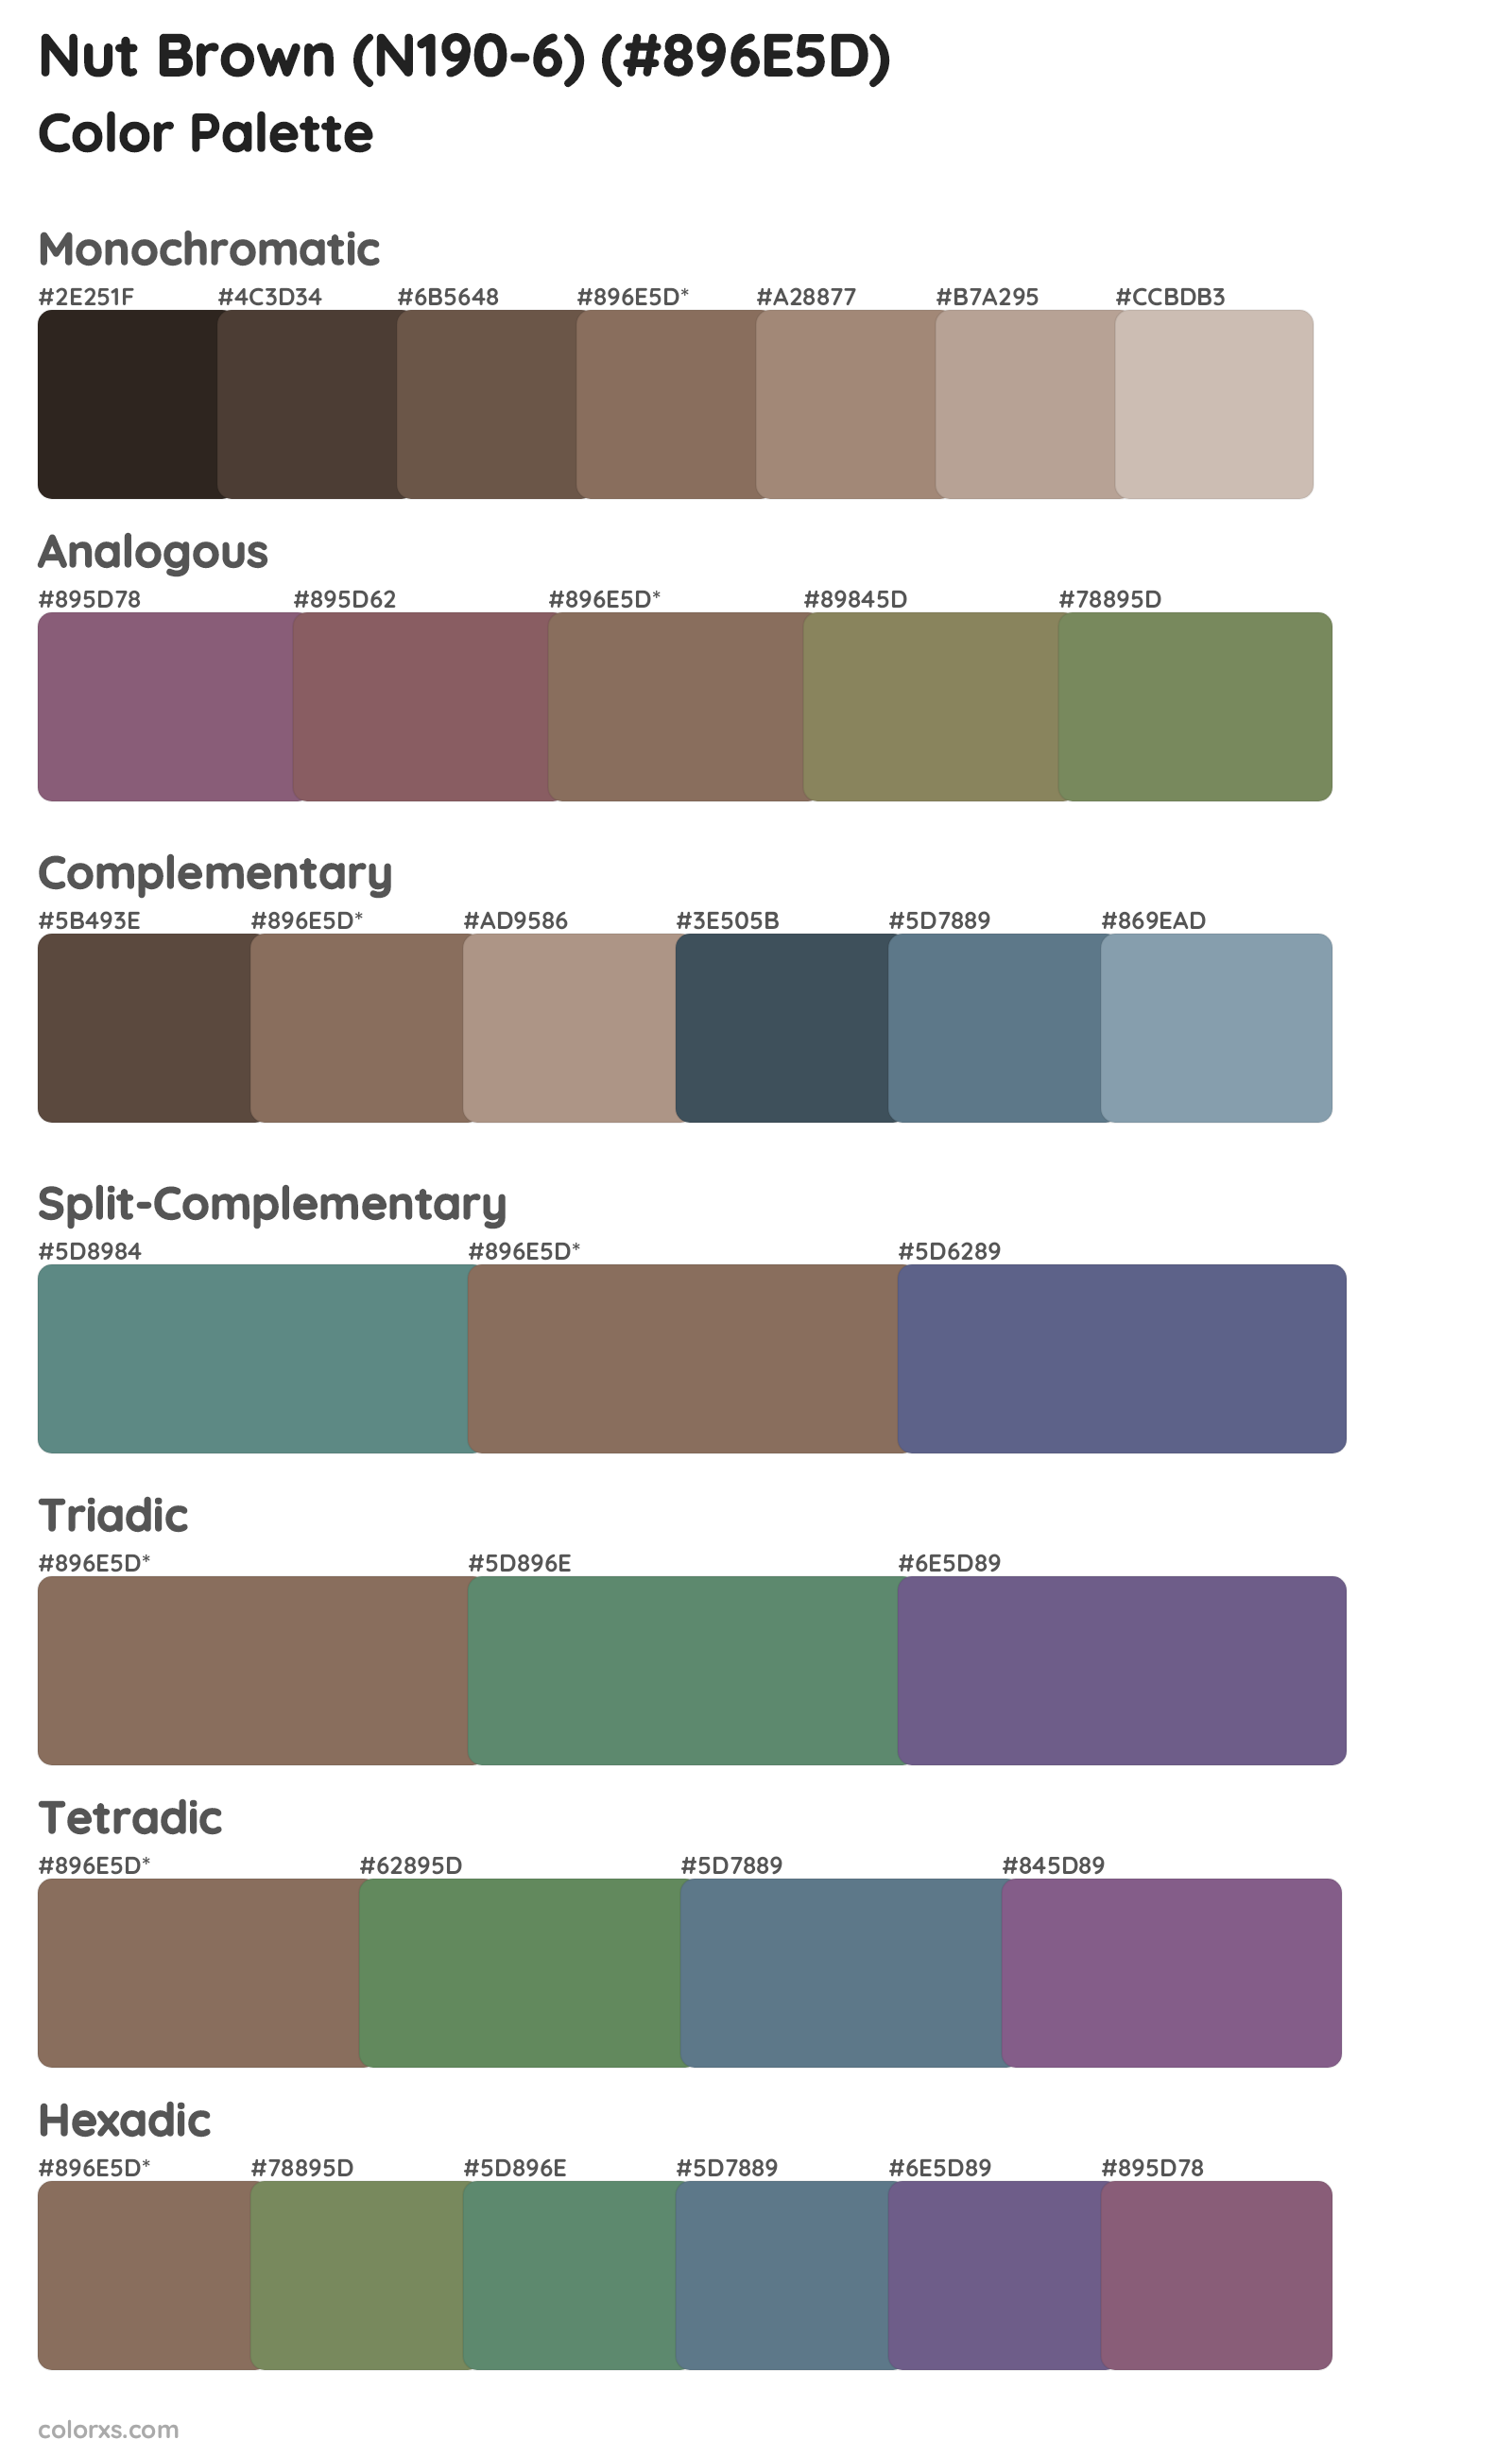 Nut Brown (N190-6) Color Scheme Palettes